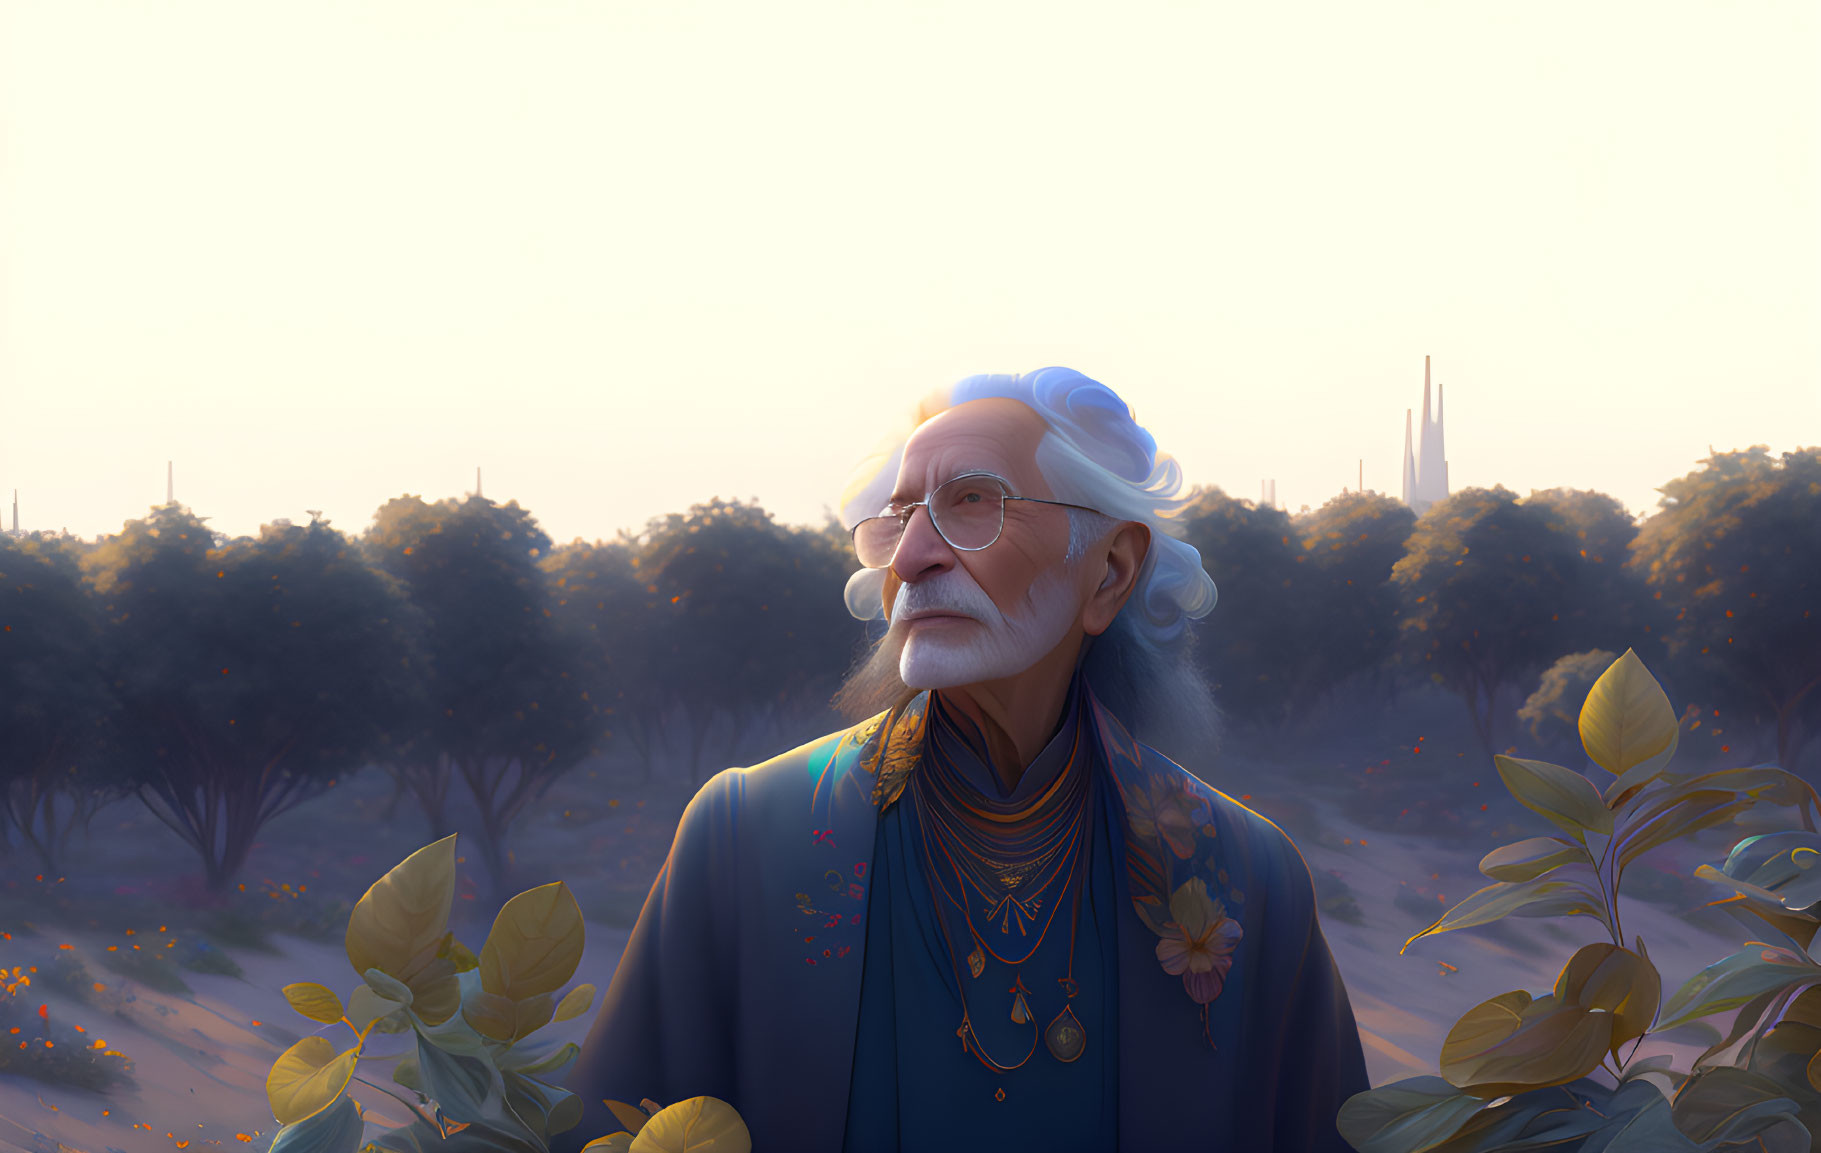 Elderly man with white hair and beard in serene landscape at dusk